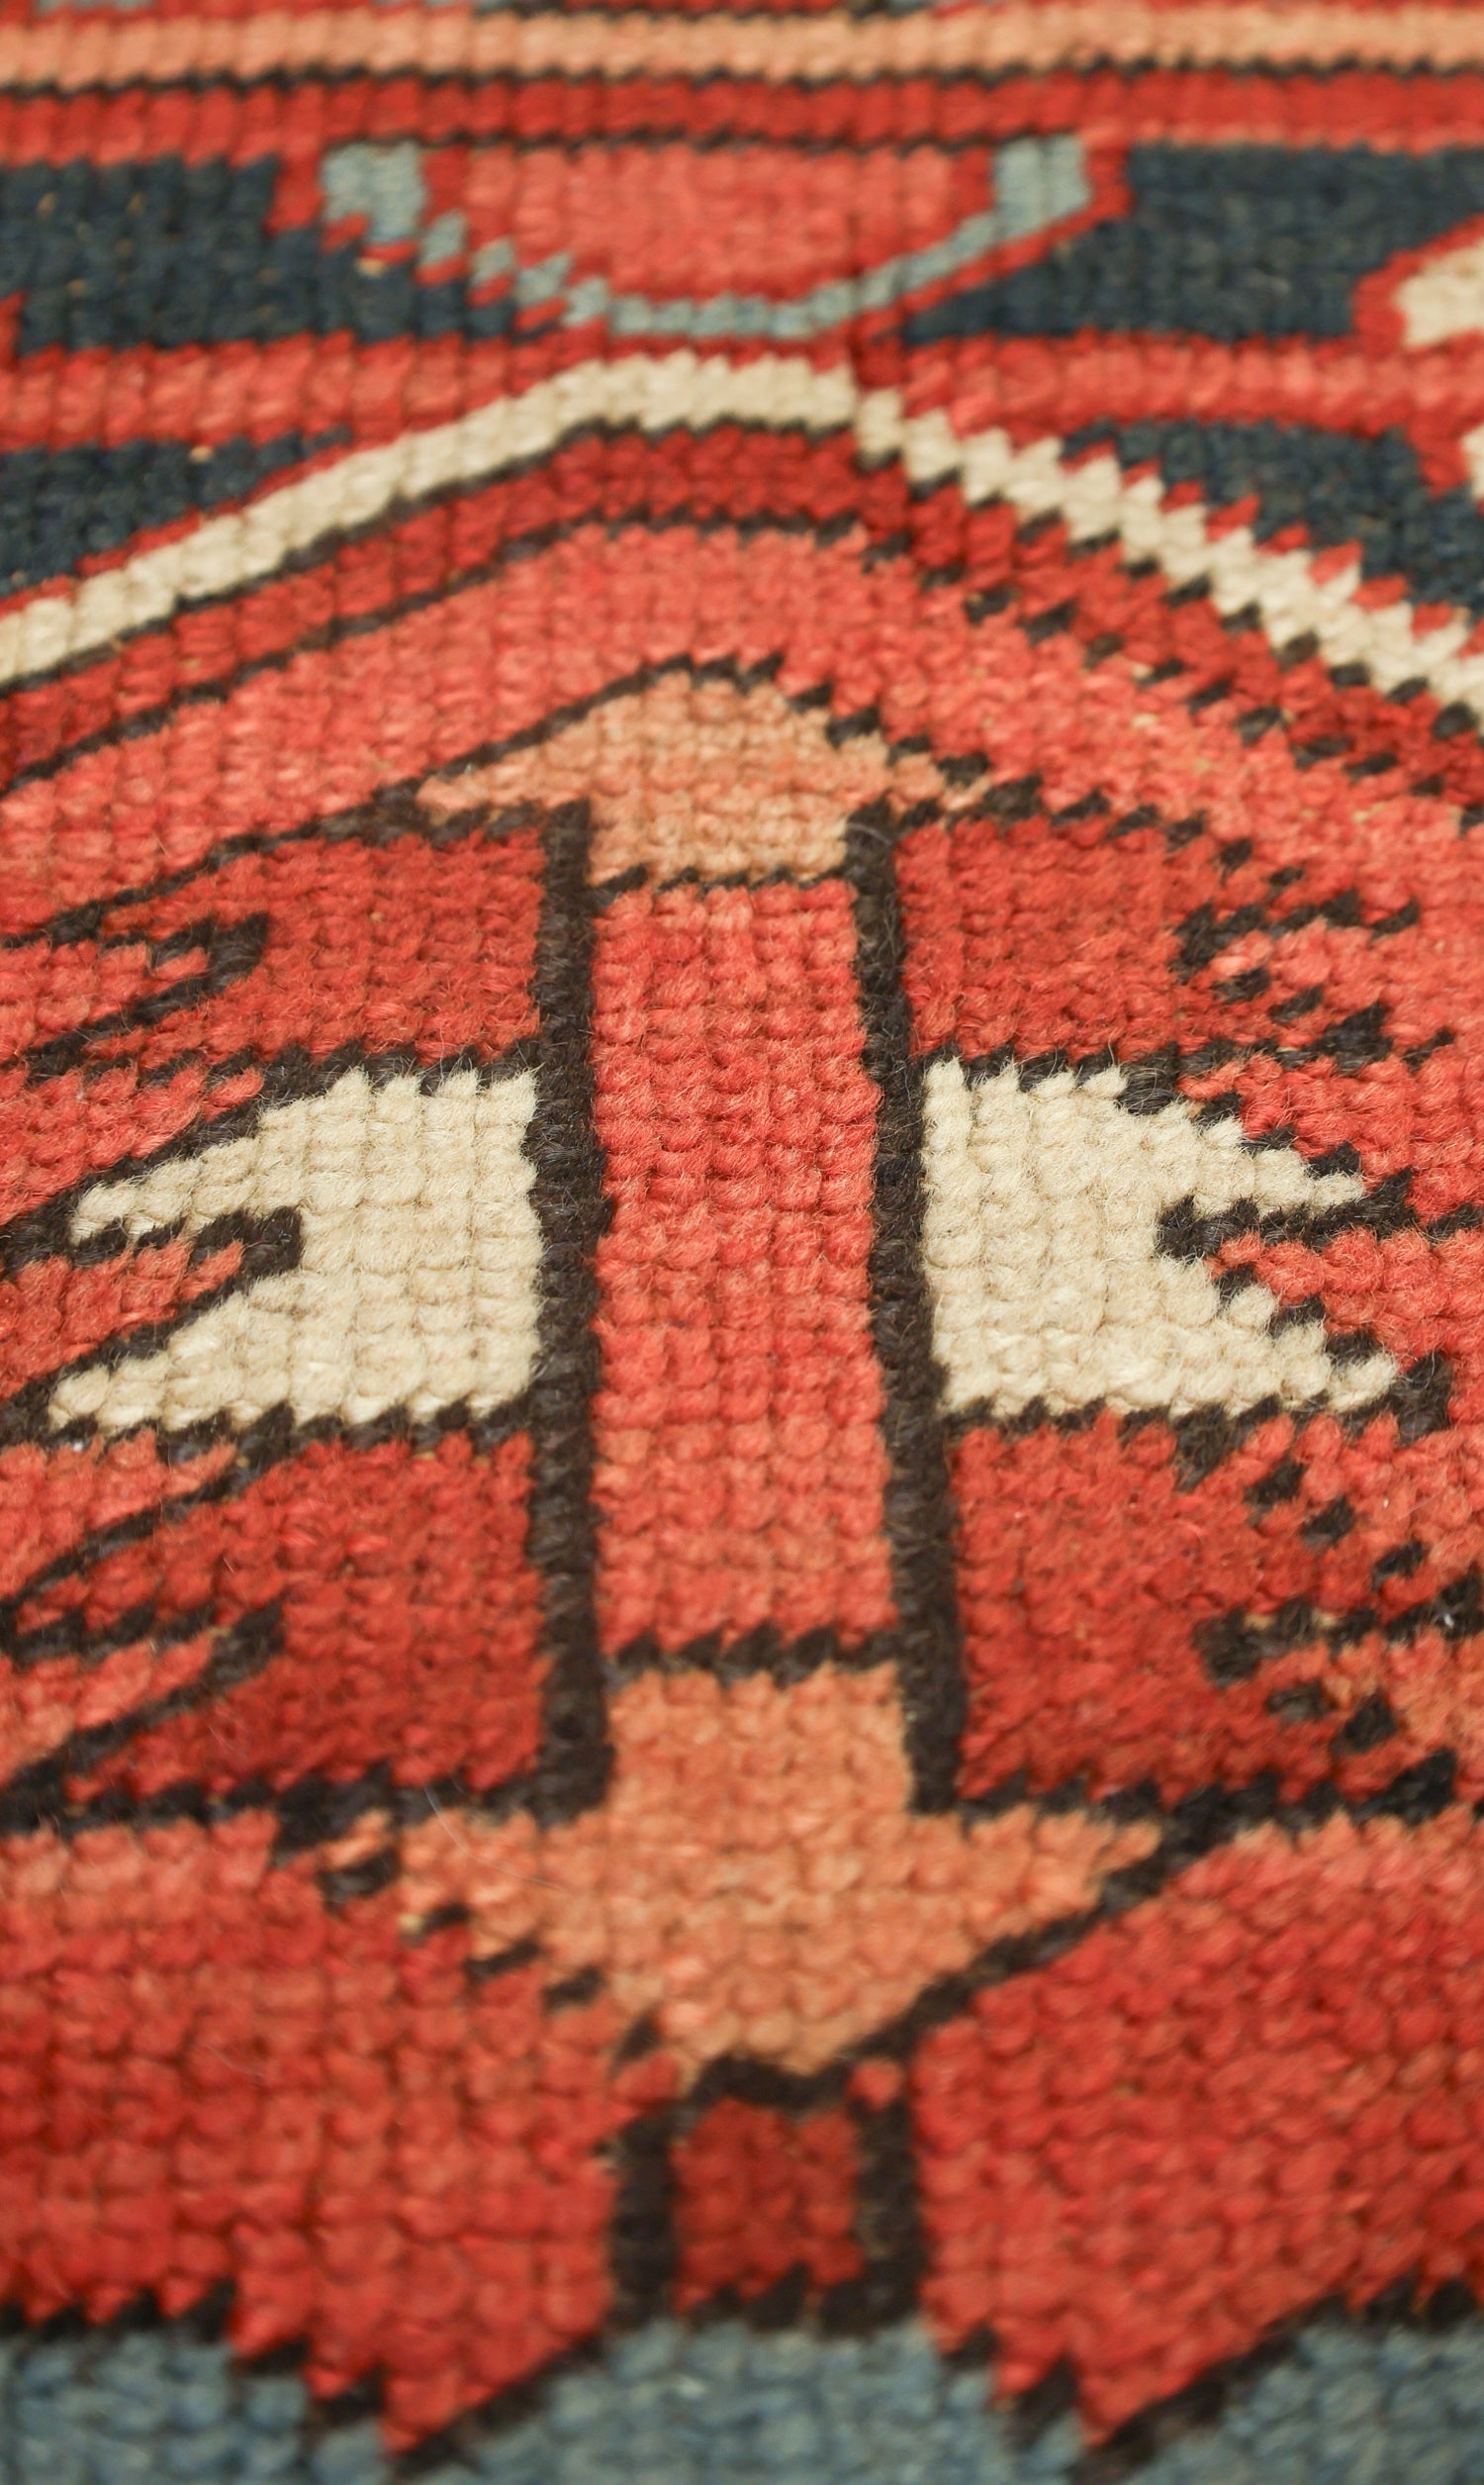 AntiqueHandwoven Tribal Rug, J70641